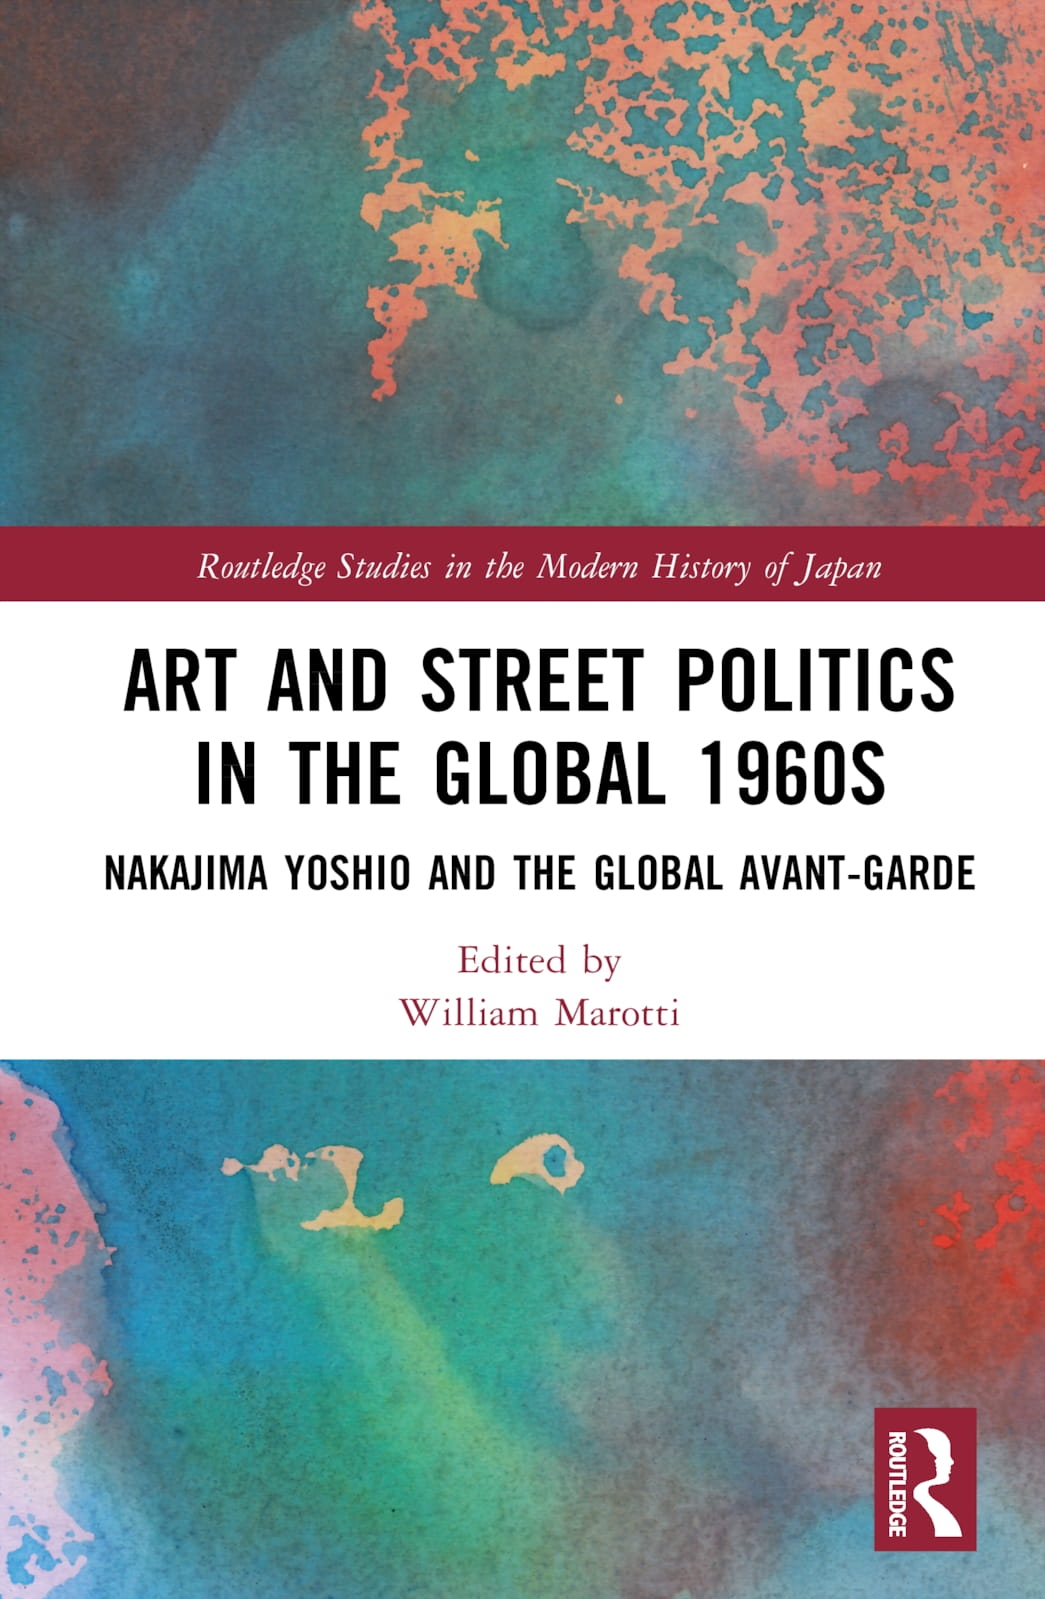 Art and Street Politics in the Global 1960s: Nakajima Yoshio and the Global Avant-Garde